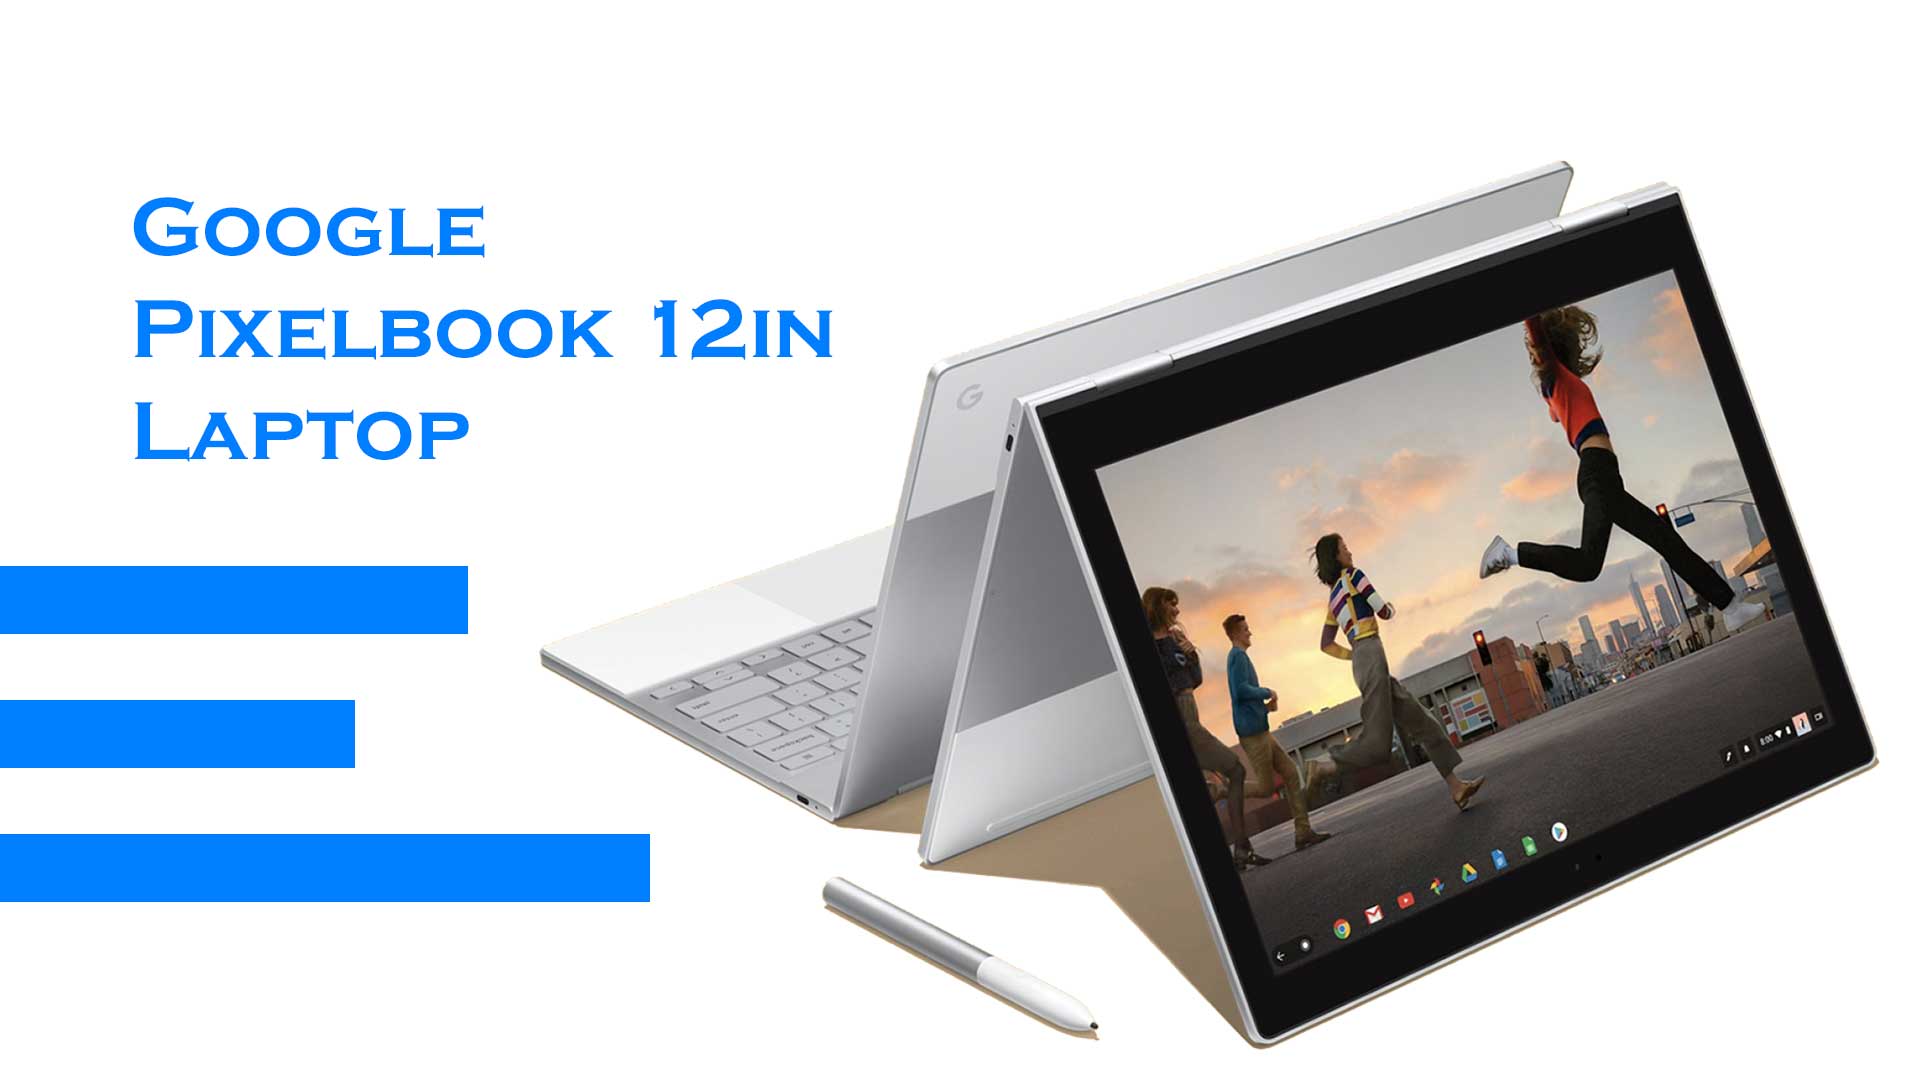 Google Pixelbook 12in Laptop detailed Review